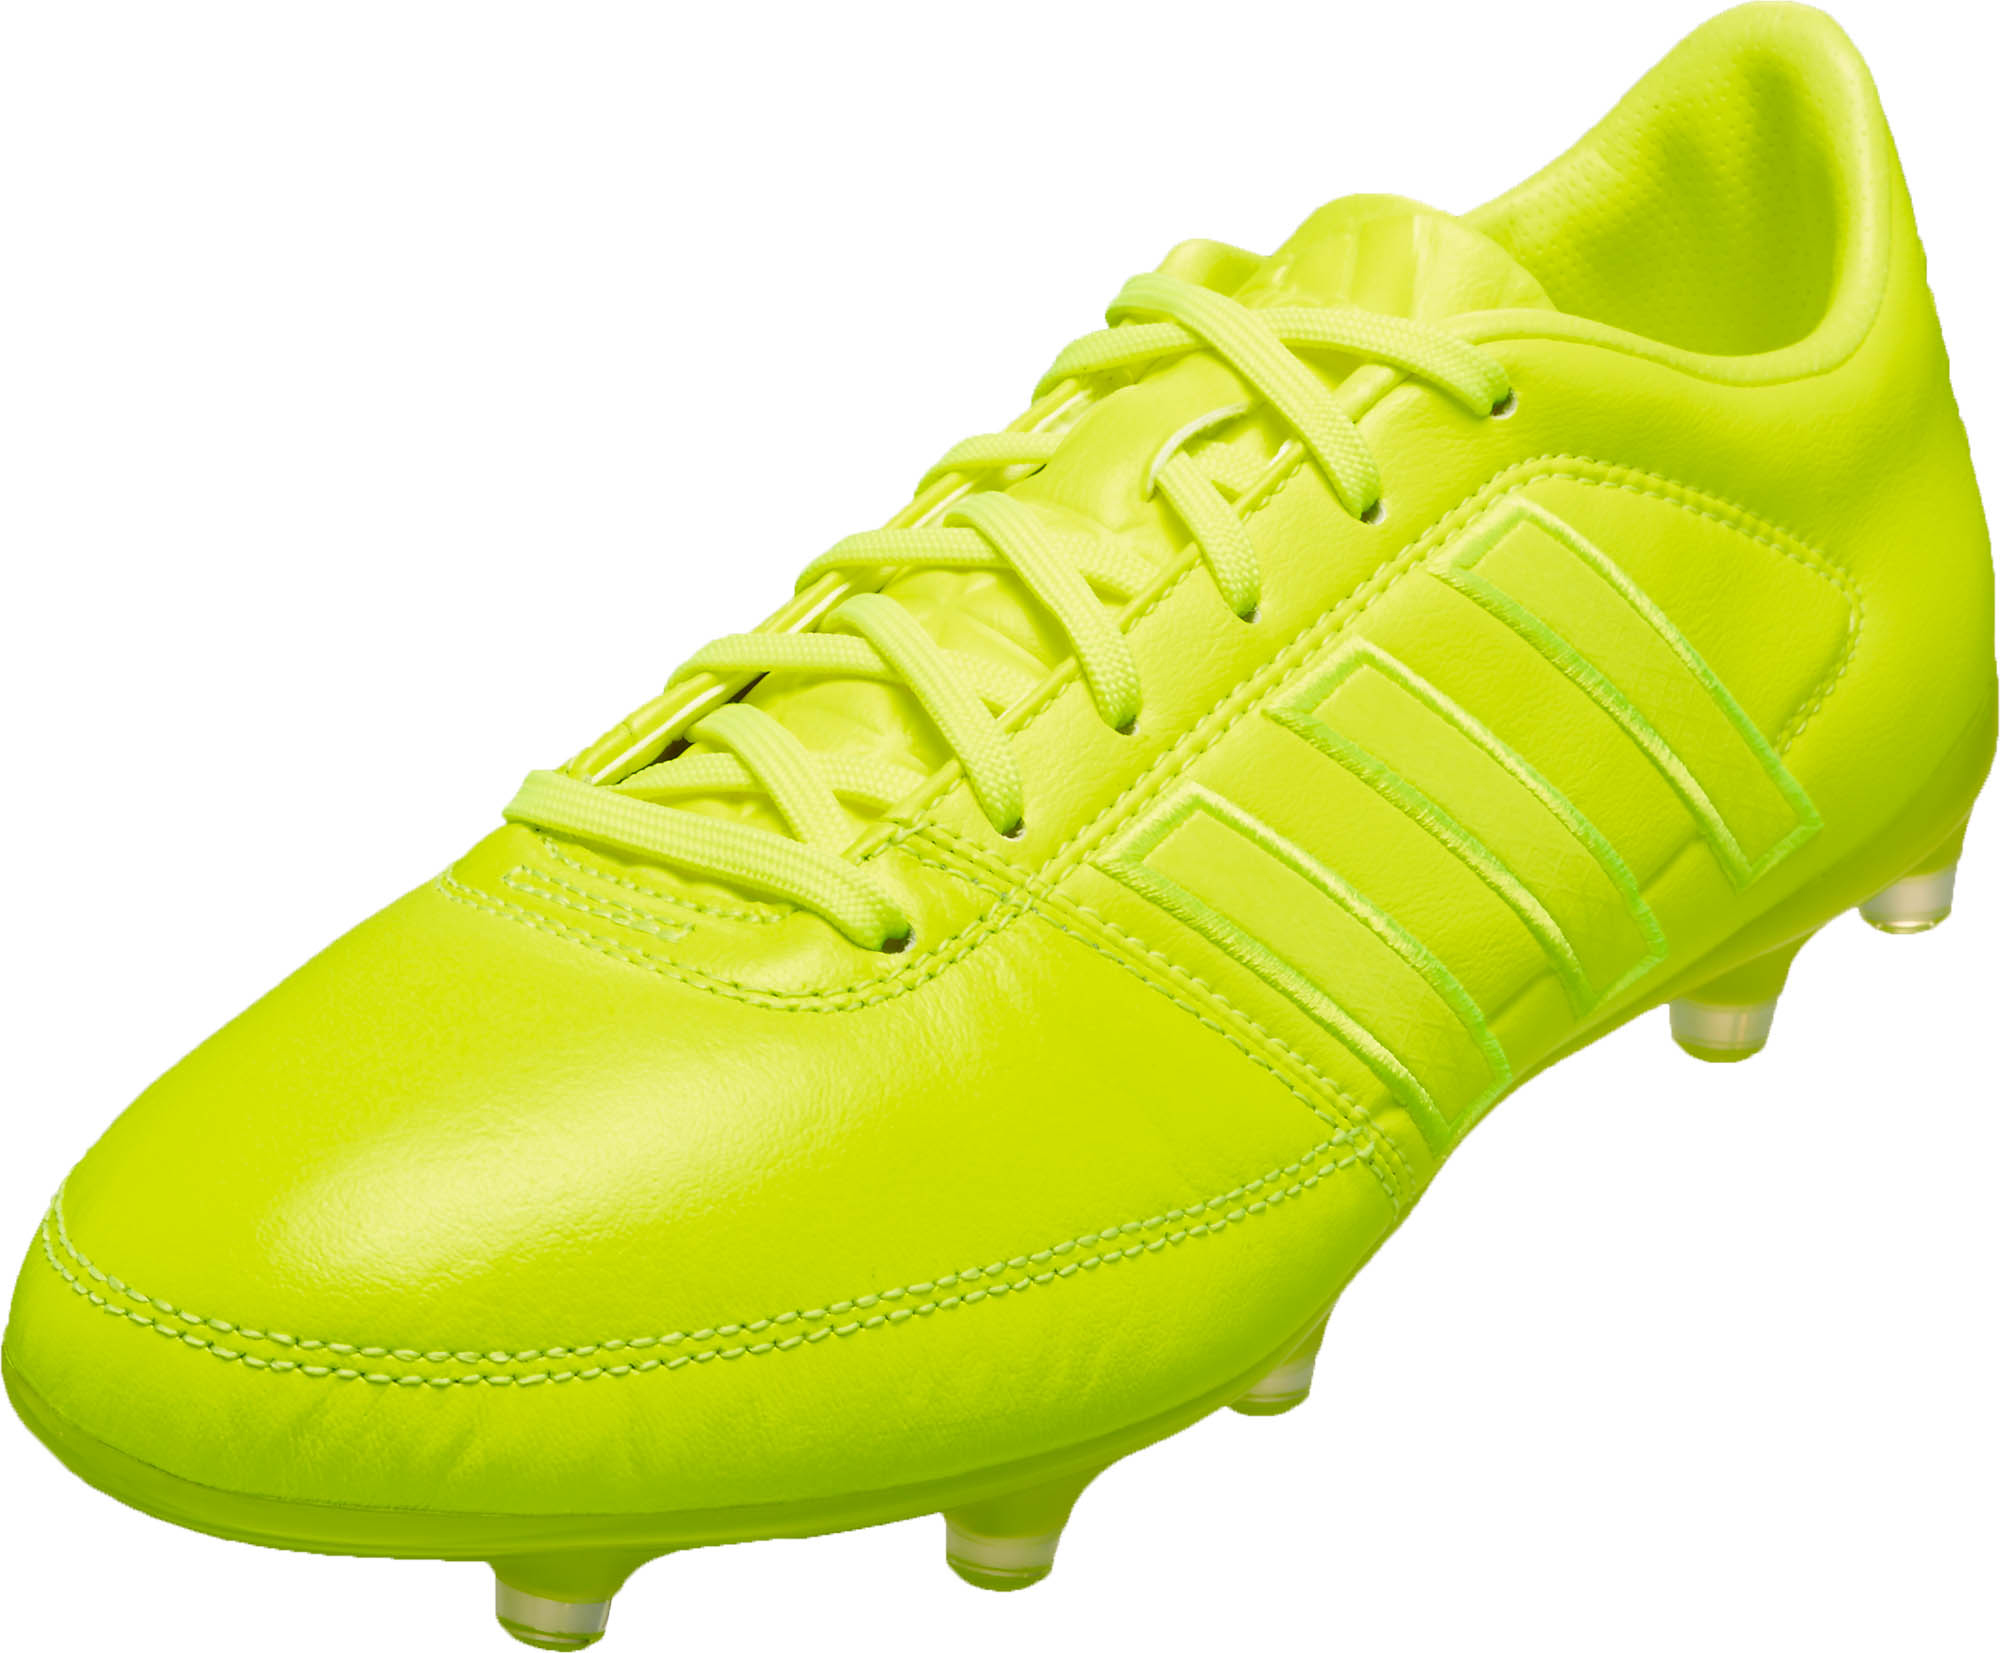 adidas Gloro 16.1 - Bright yellow adidas Soccer Cleats